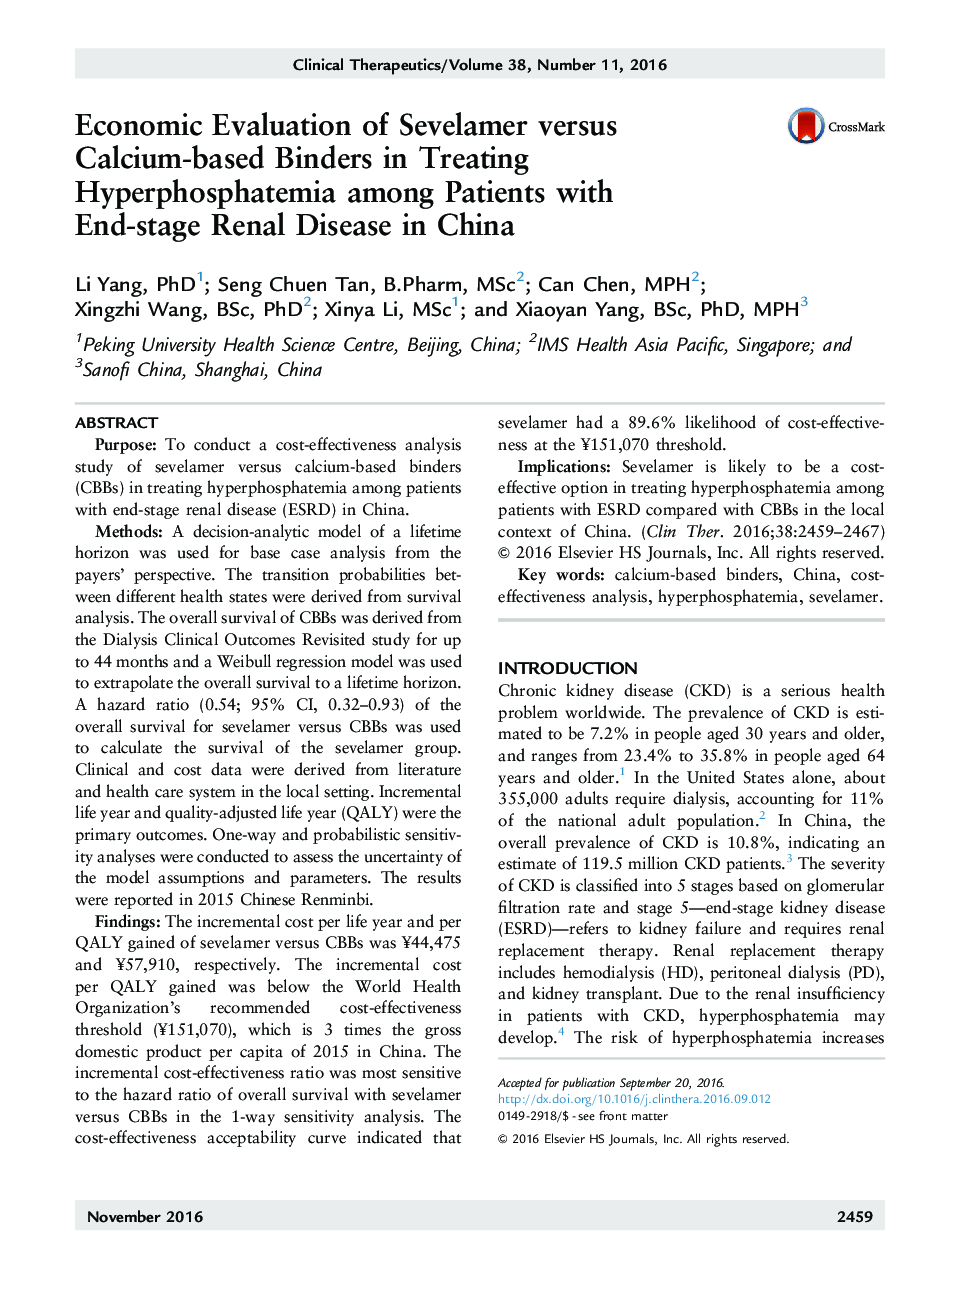 Economic Evaluation of Sevelamer versus Calcium-based Binders in Treating Hyperphosphatemia among Patients with End-stage Renal Disease in China